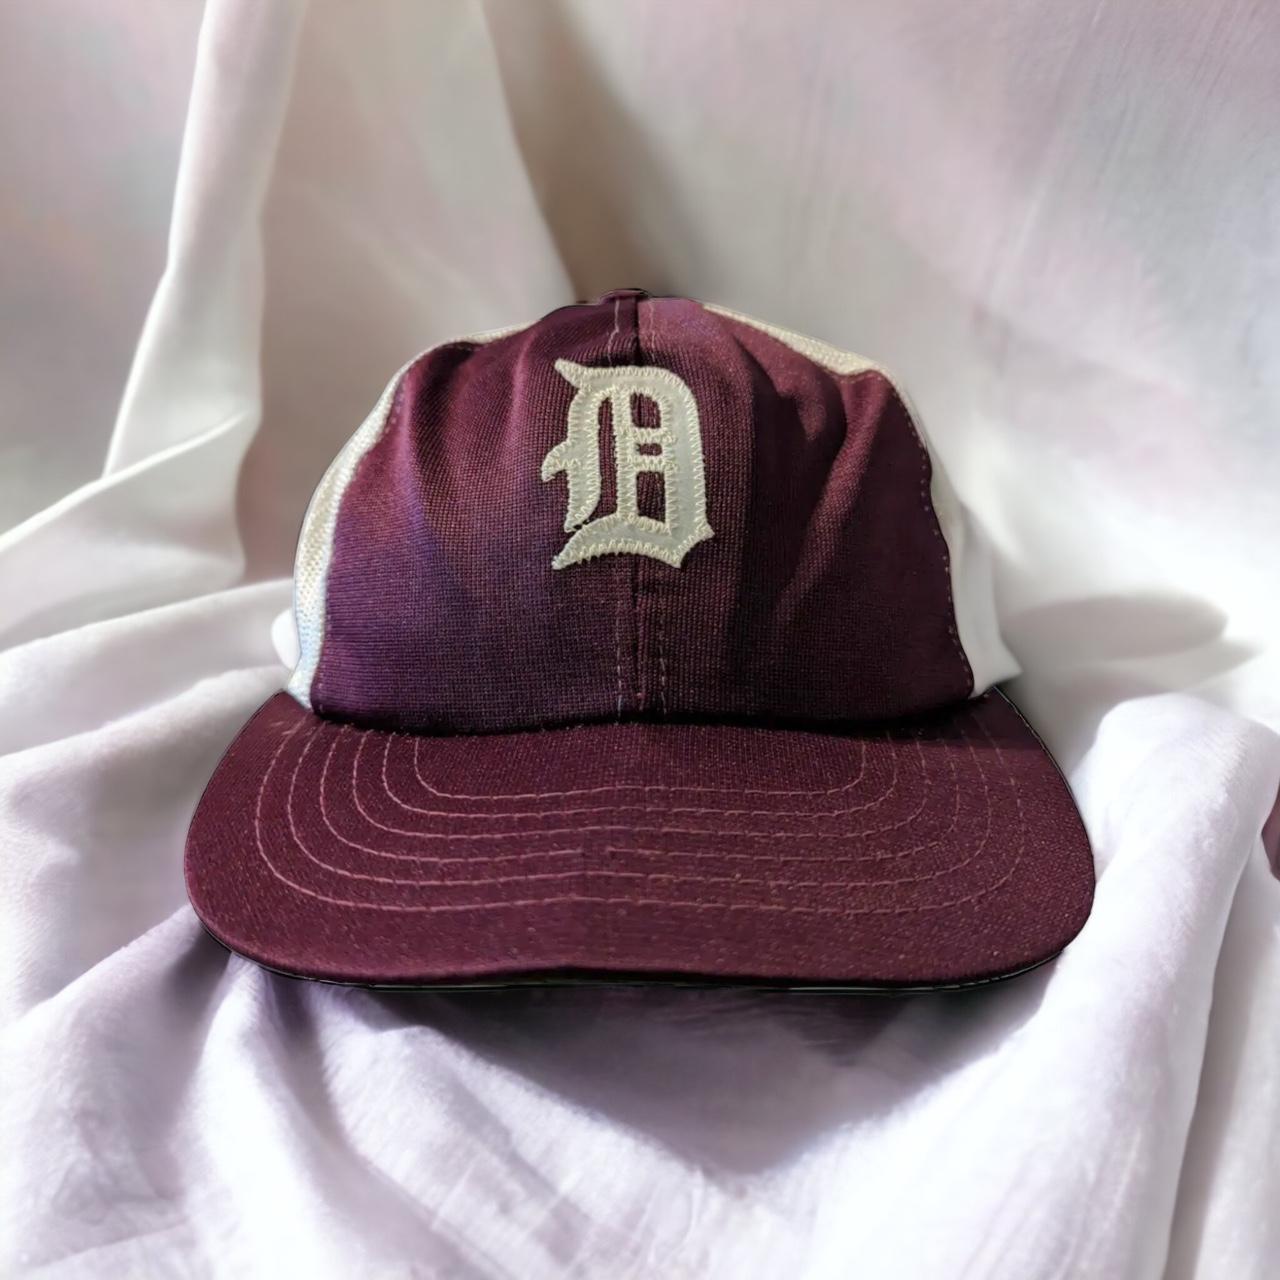 burgundy detroit tigers hat